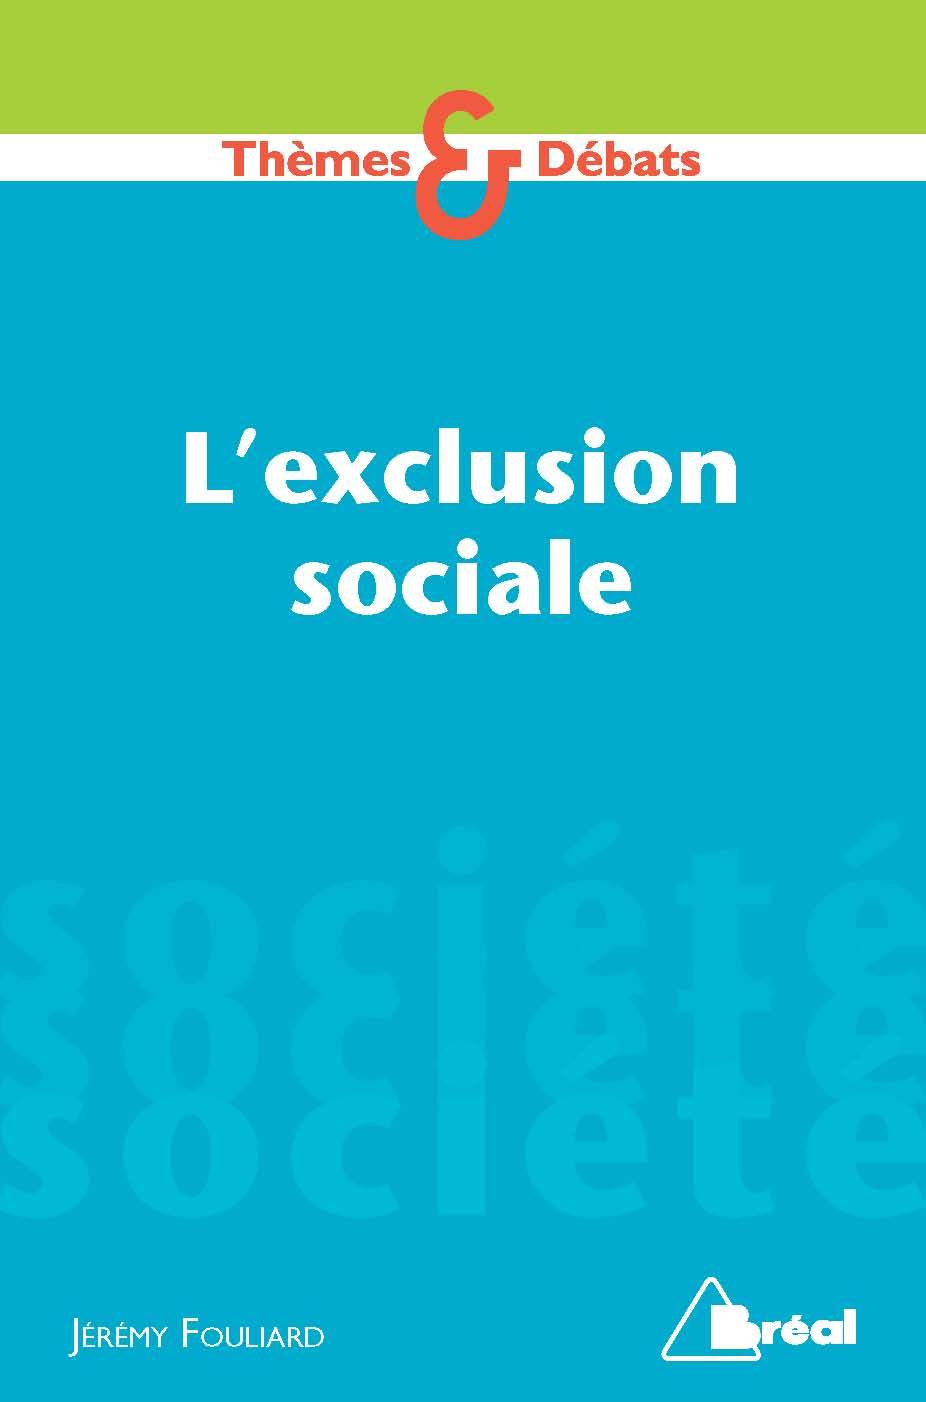 L'exclusion sociale (9782749536323-front-cover)